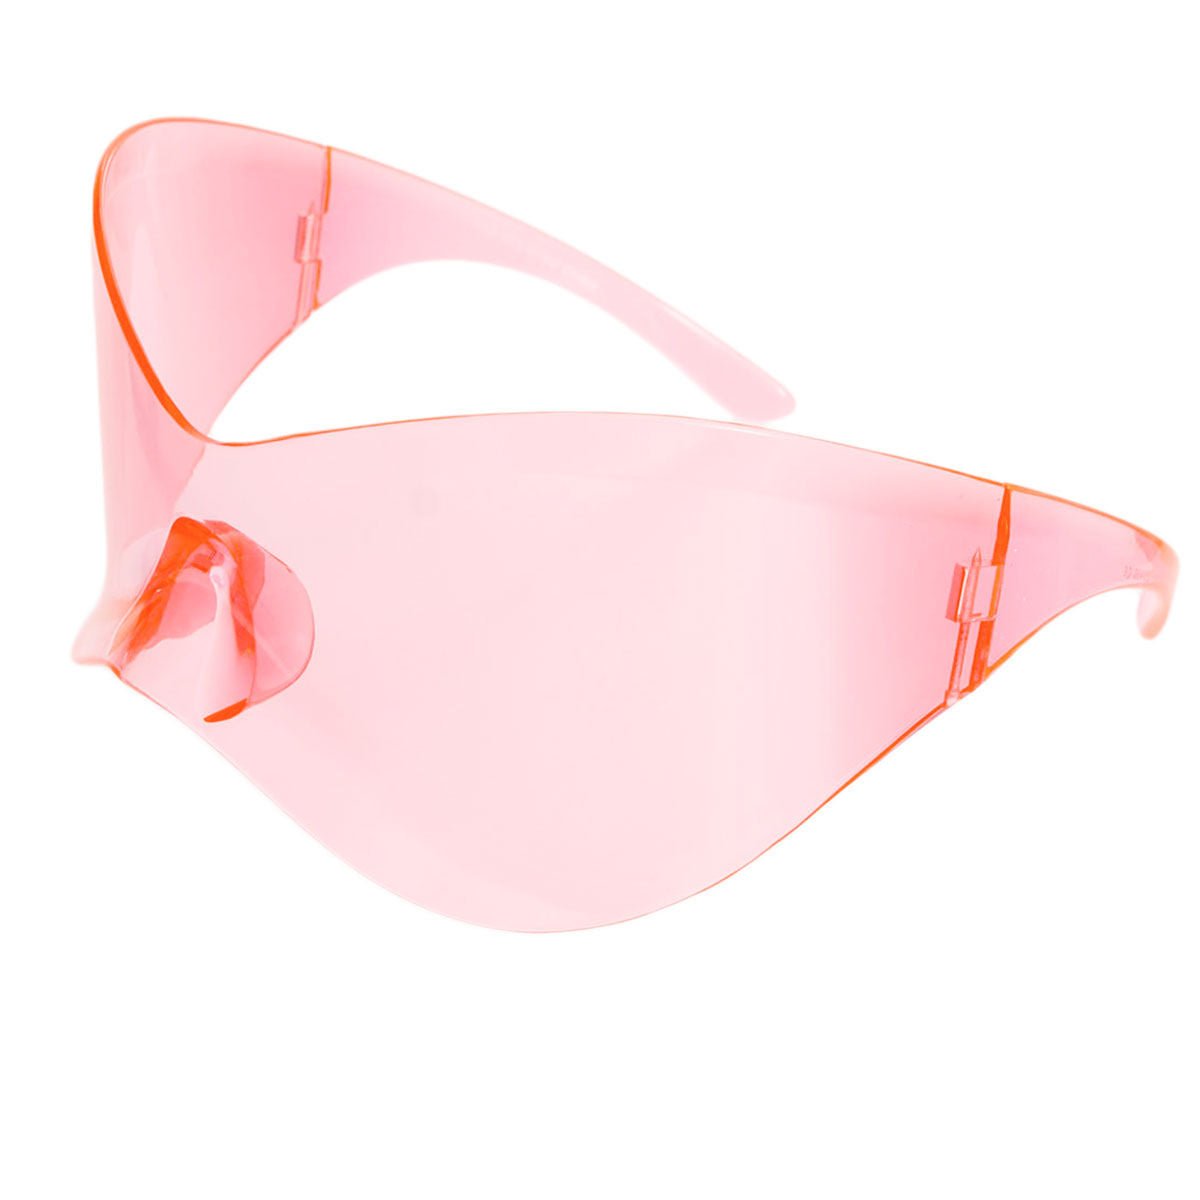 Sunglasses Mask Wrap Pink Eyewear for Women - Bae Apparel